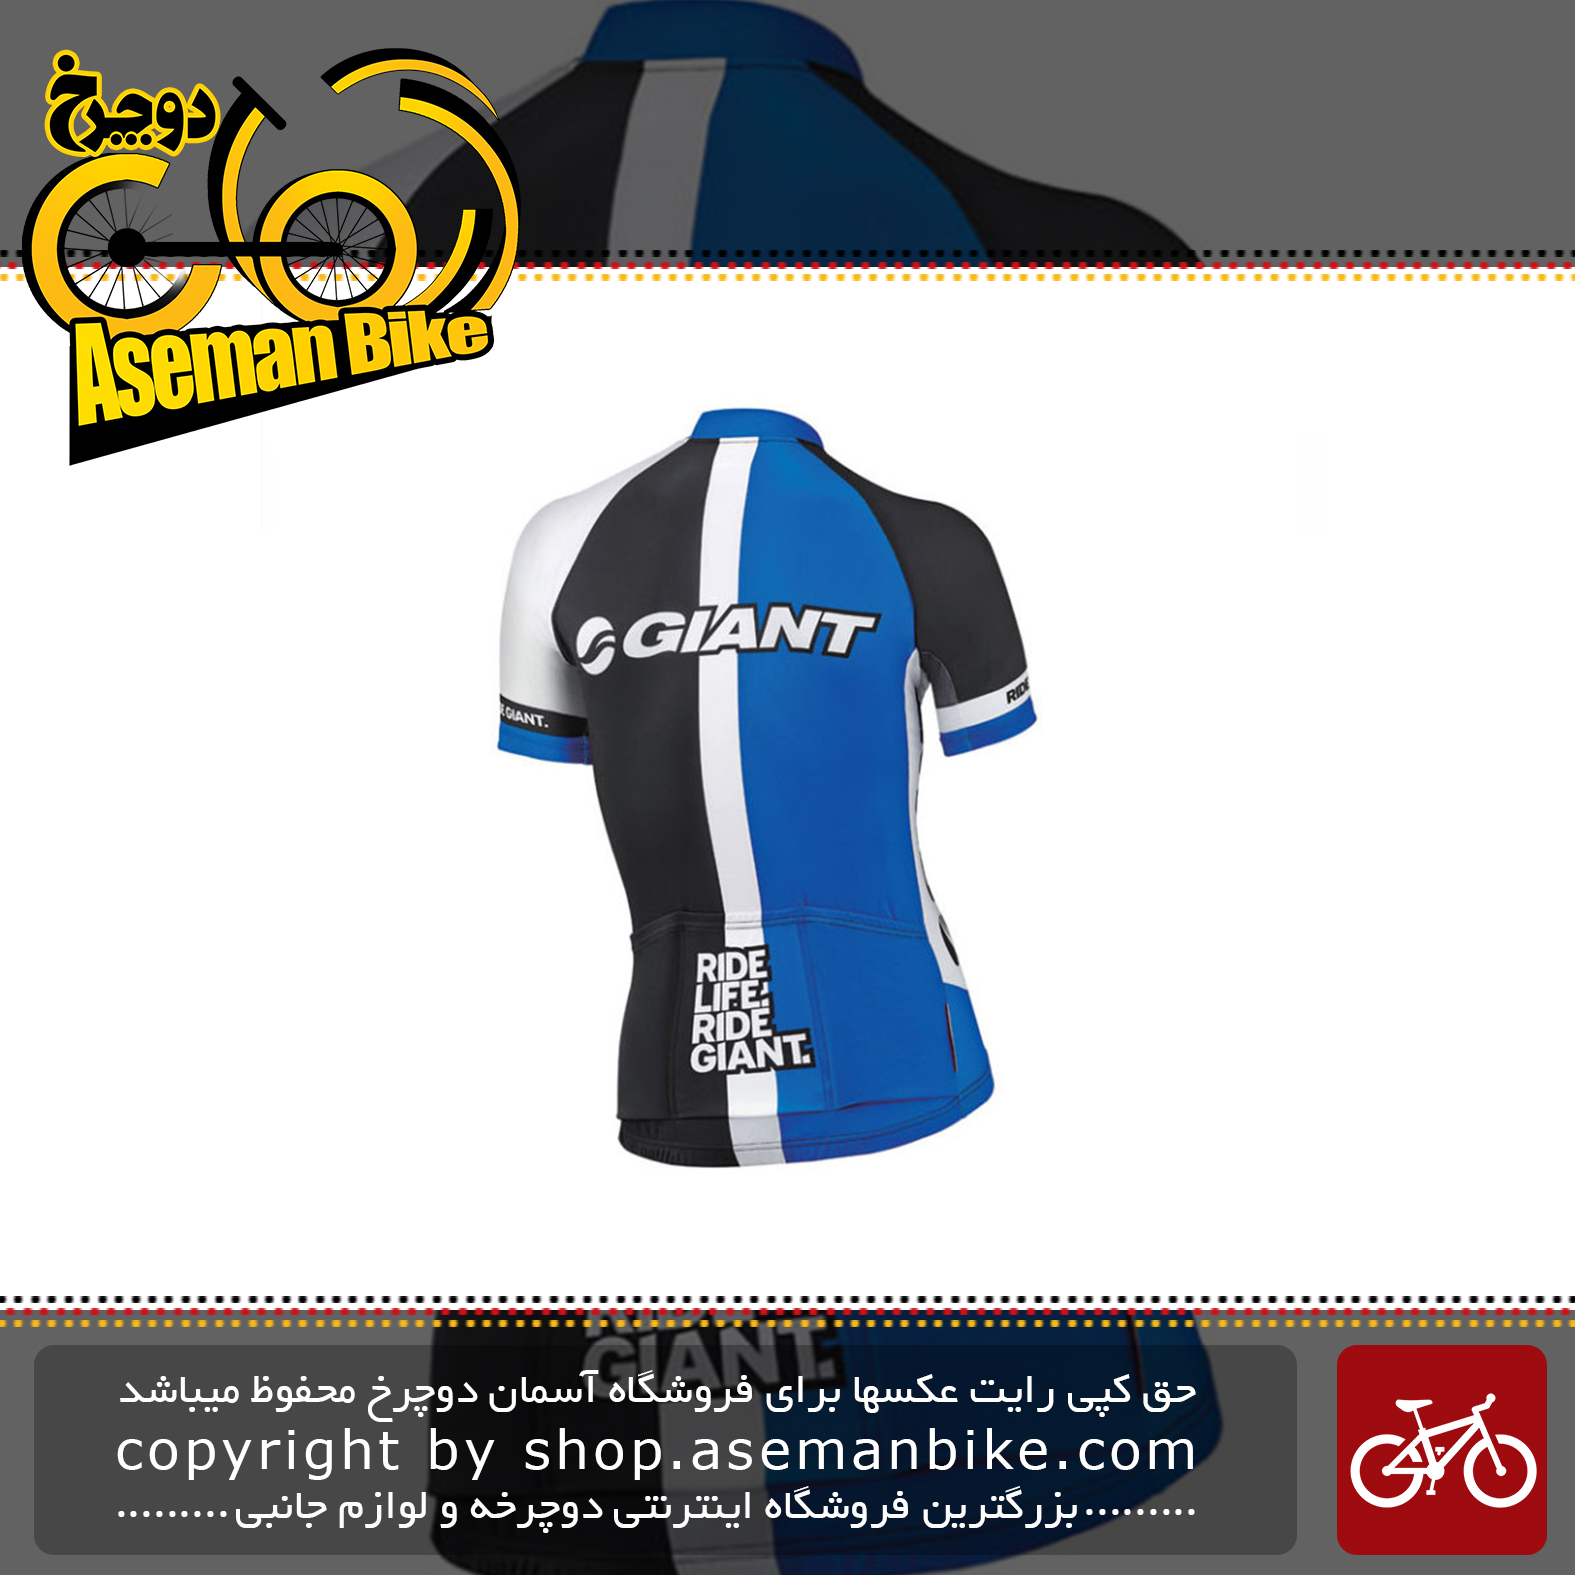 لباس دوچرخه سواری تی شرت زیپ دار جاینت مدل رییس دی آستین کوتاه Bicycle Giant Race Day Short Sleeve Jersey LG